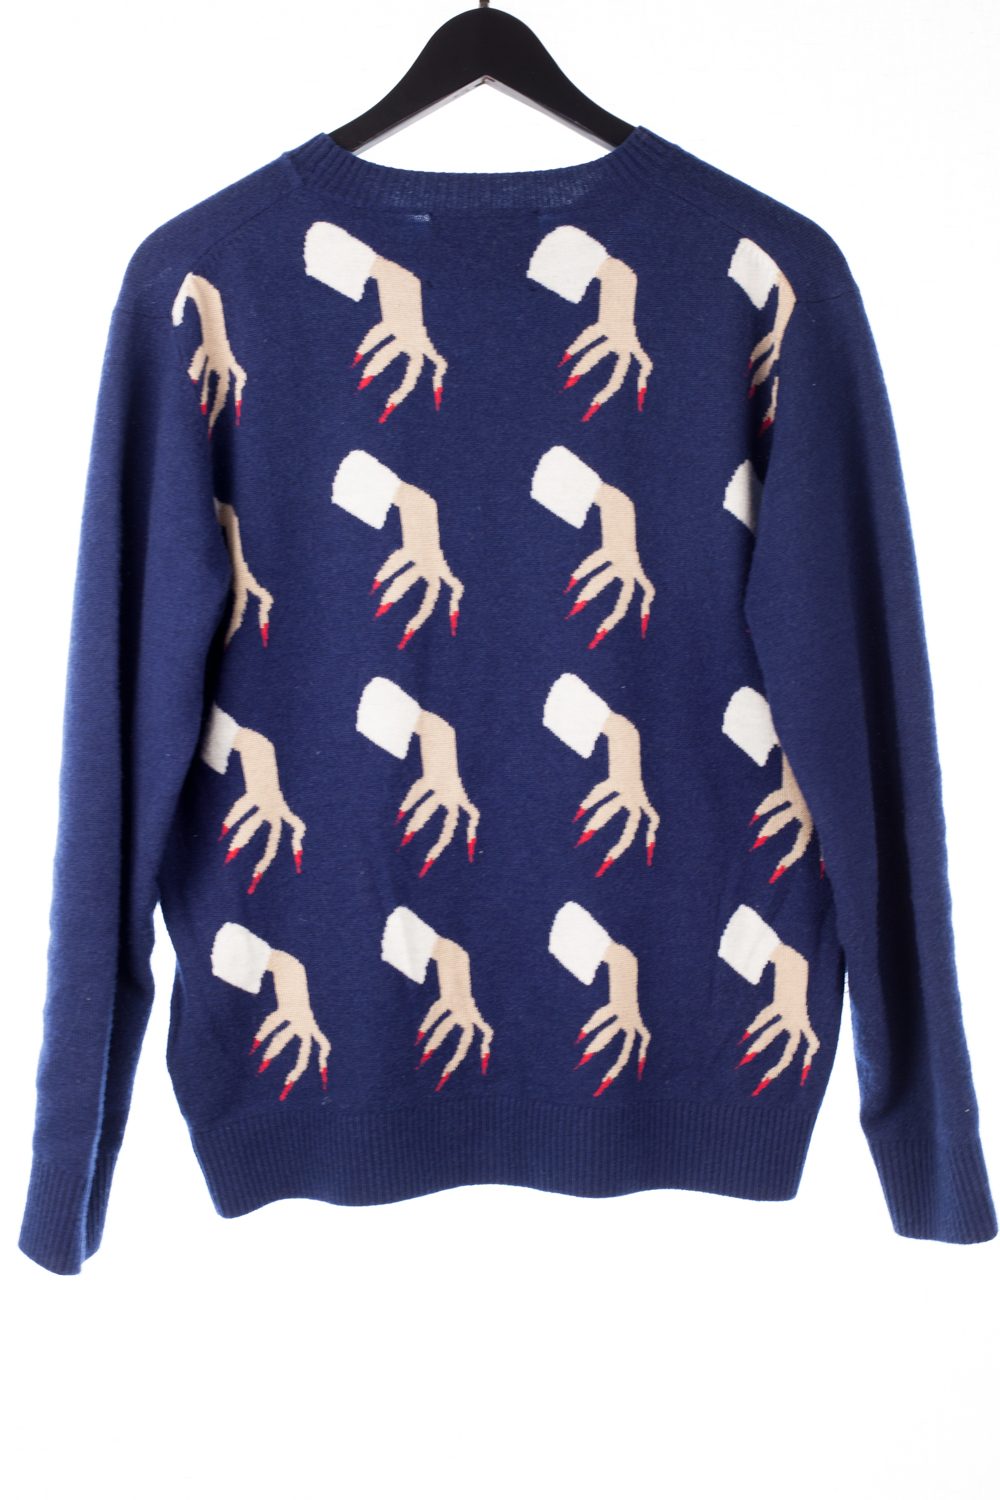 FW15 Back “Hand” Wool Sweater